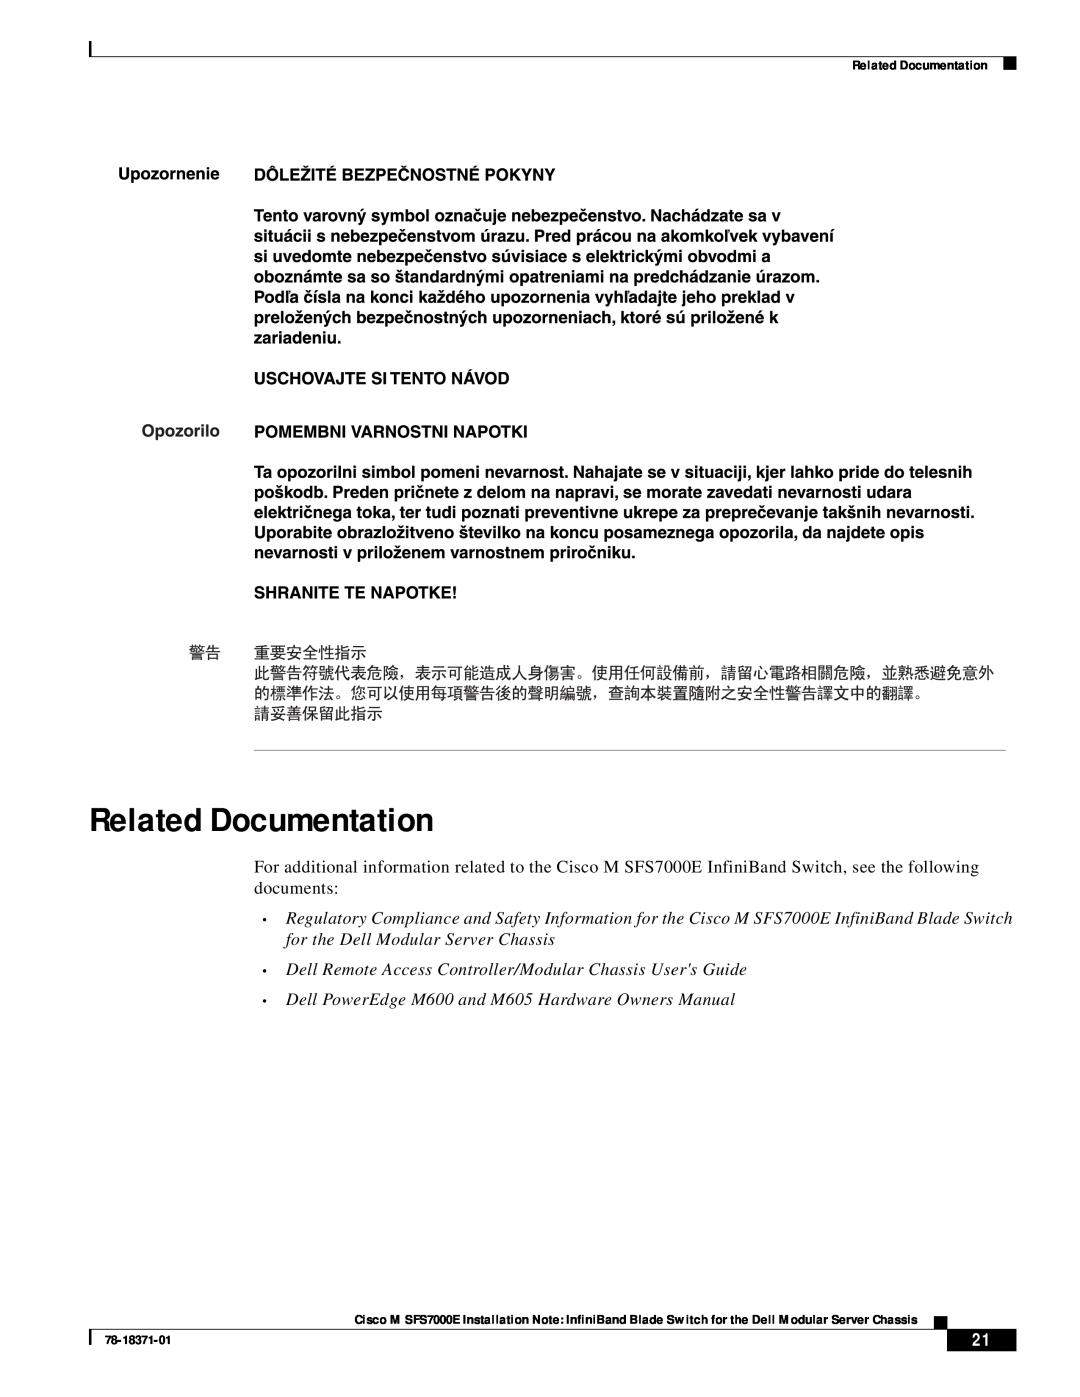 Cisco Systems M SFS7000E specifications Related Documentation 